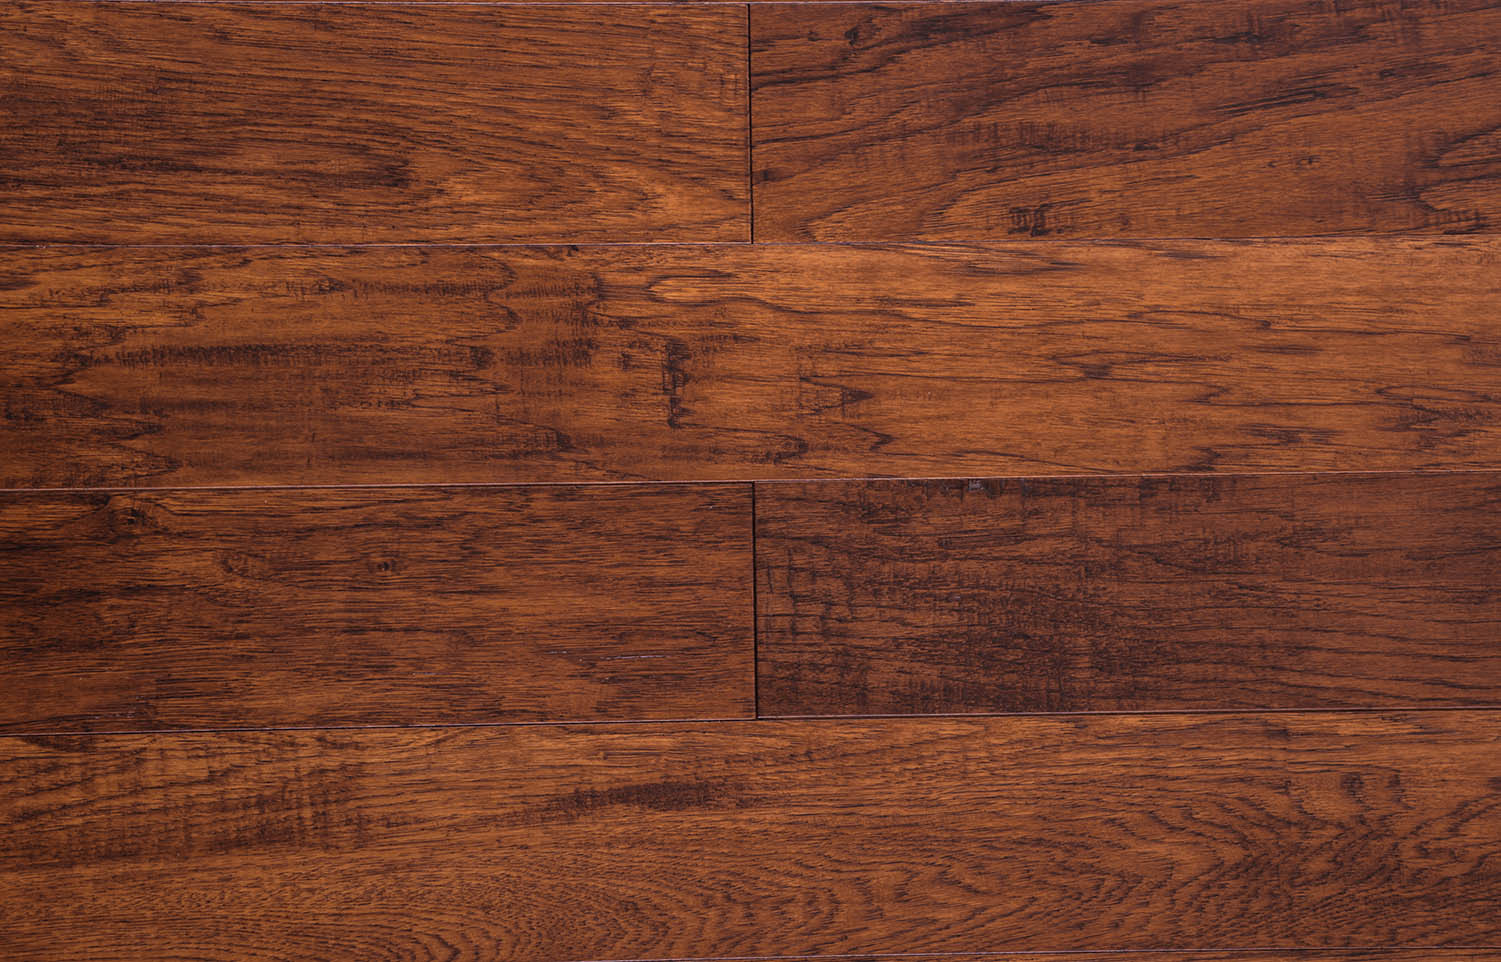 30 Popular Hardness Of Hardwood Flooring Types 2022 free download hardness of hardwood flooring types of hardwood flooring regarding specifications